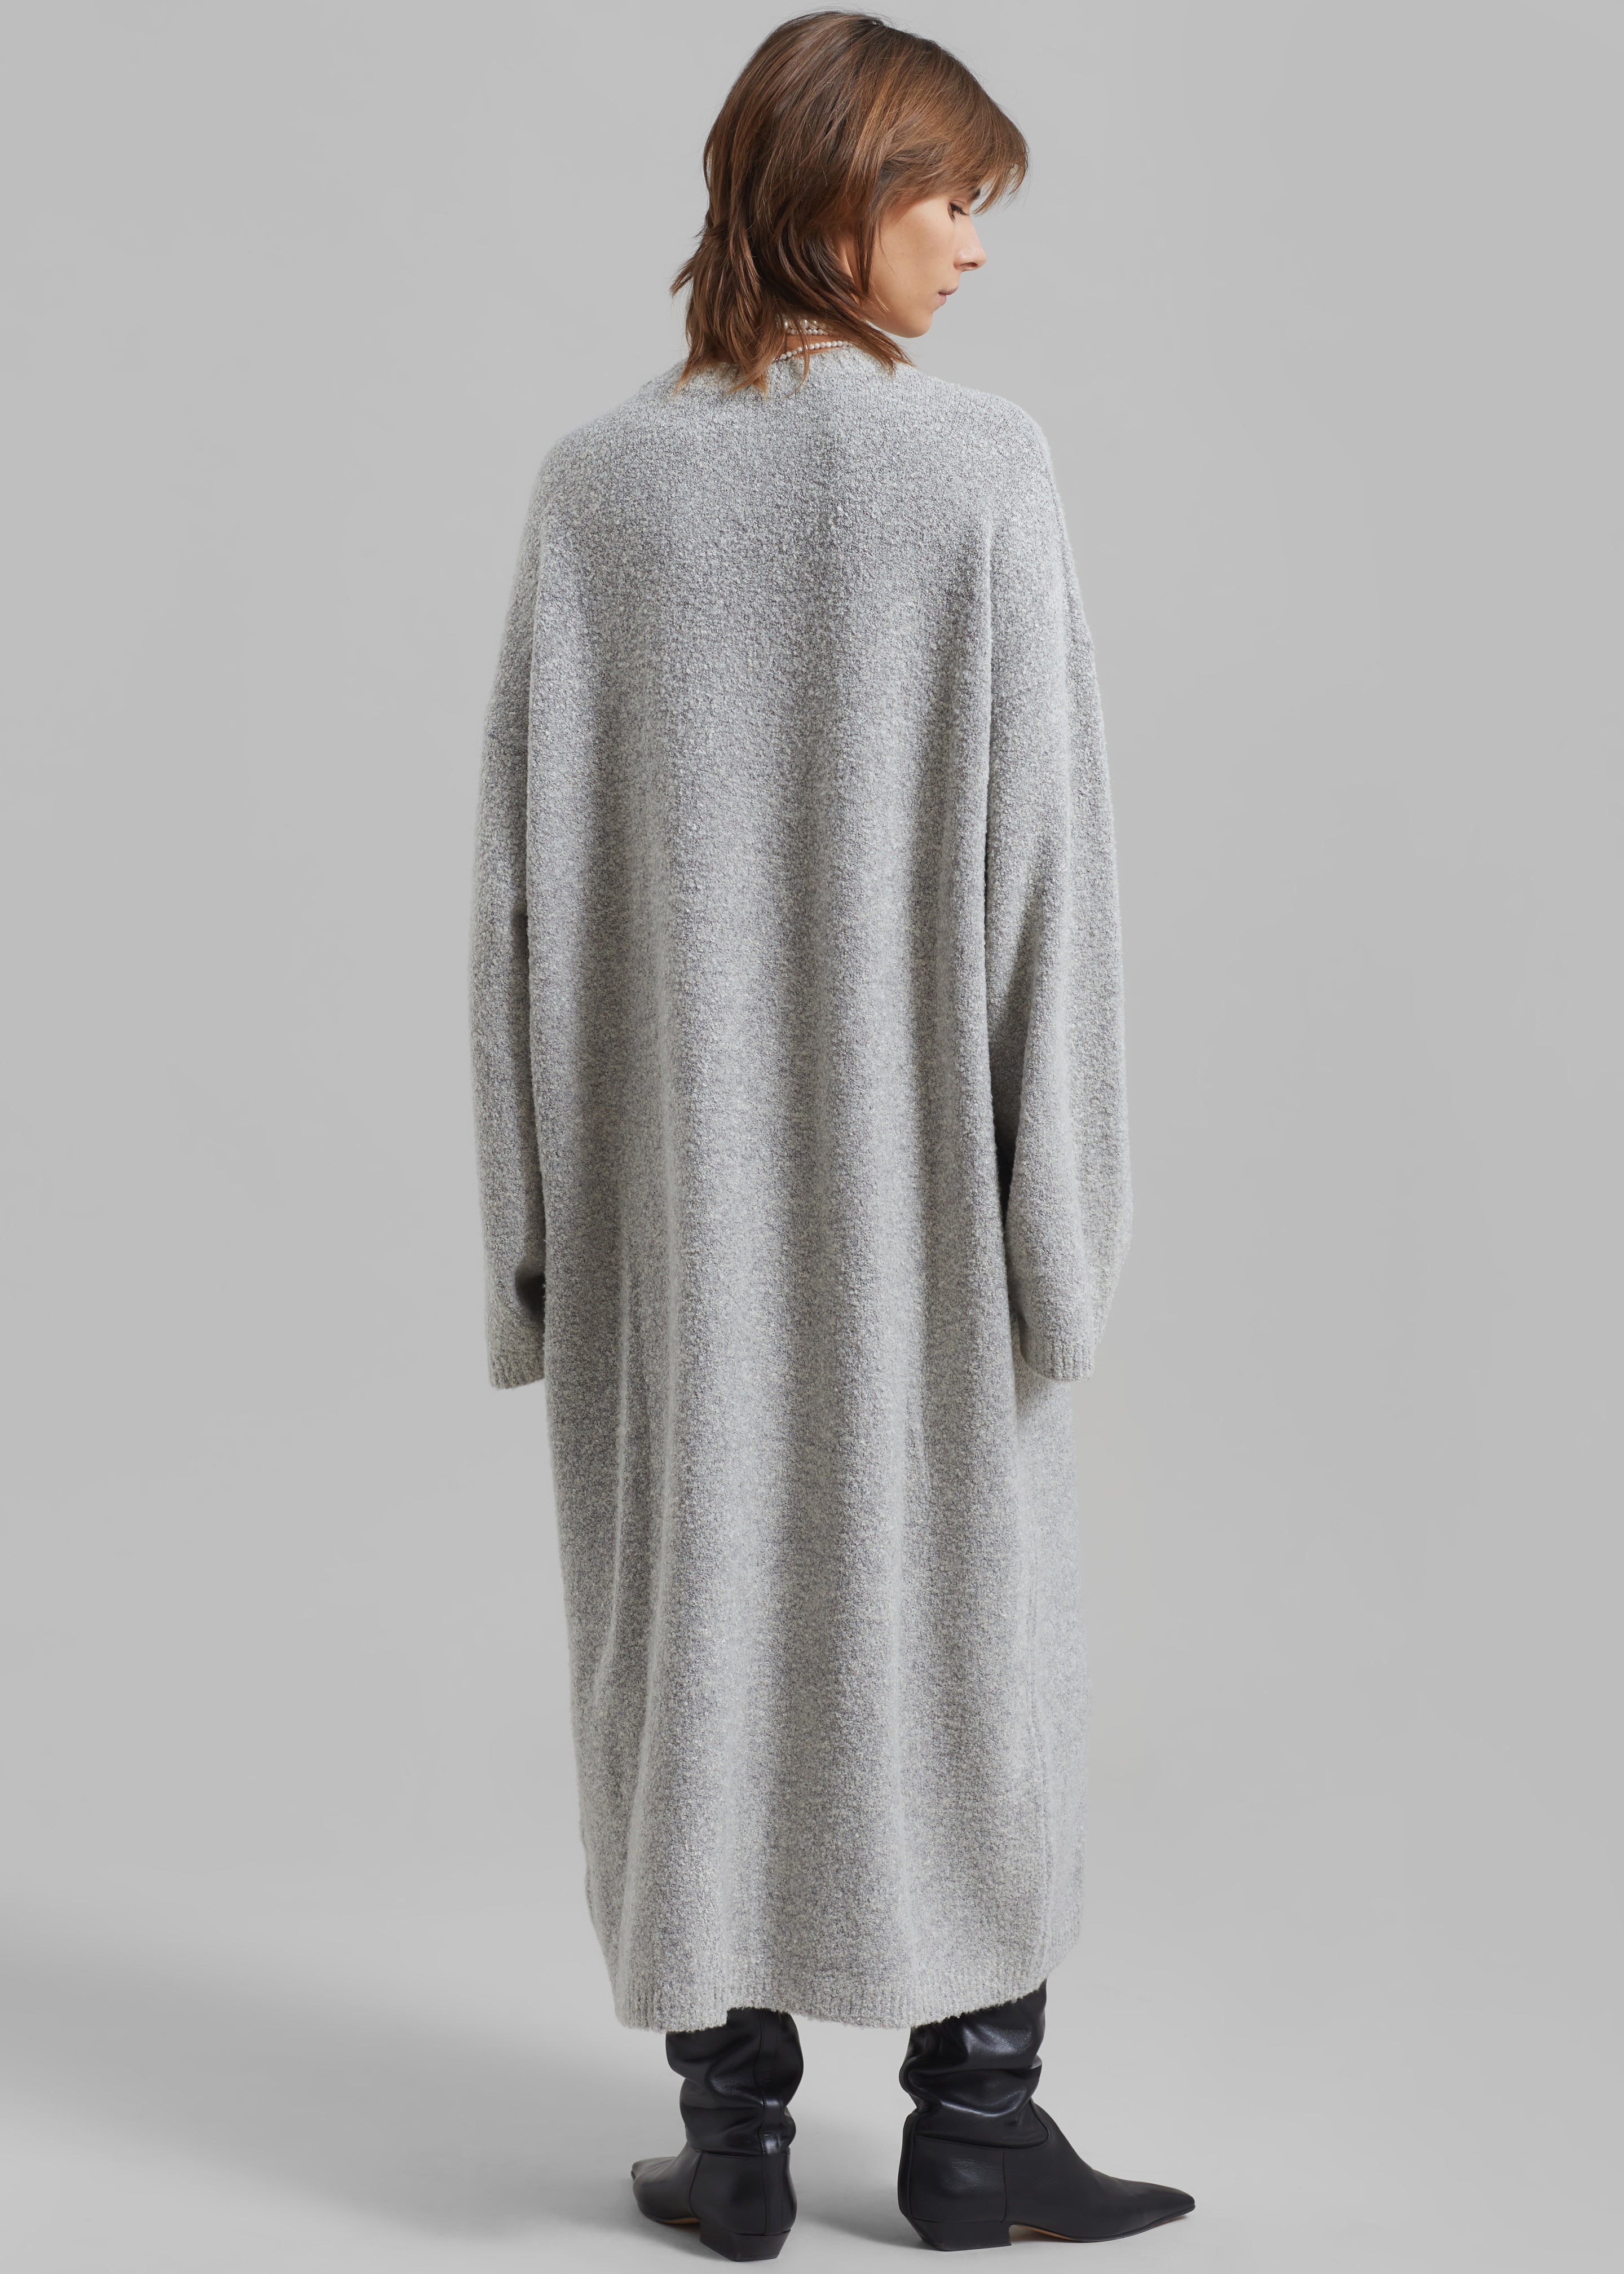 Alba Long Hooded Dress - Grey - 7